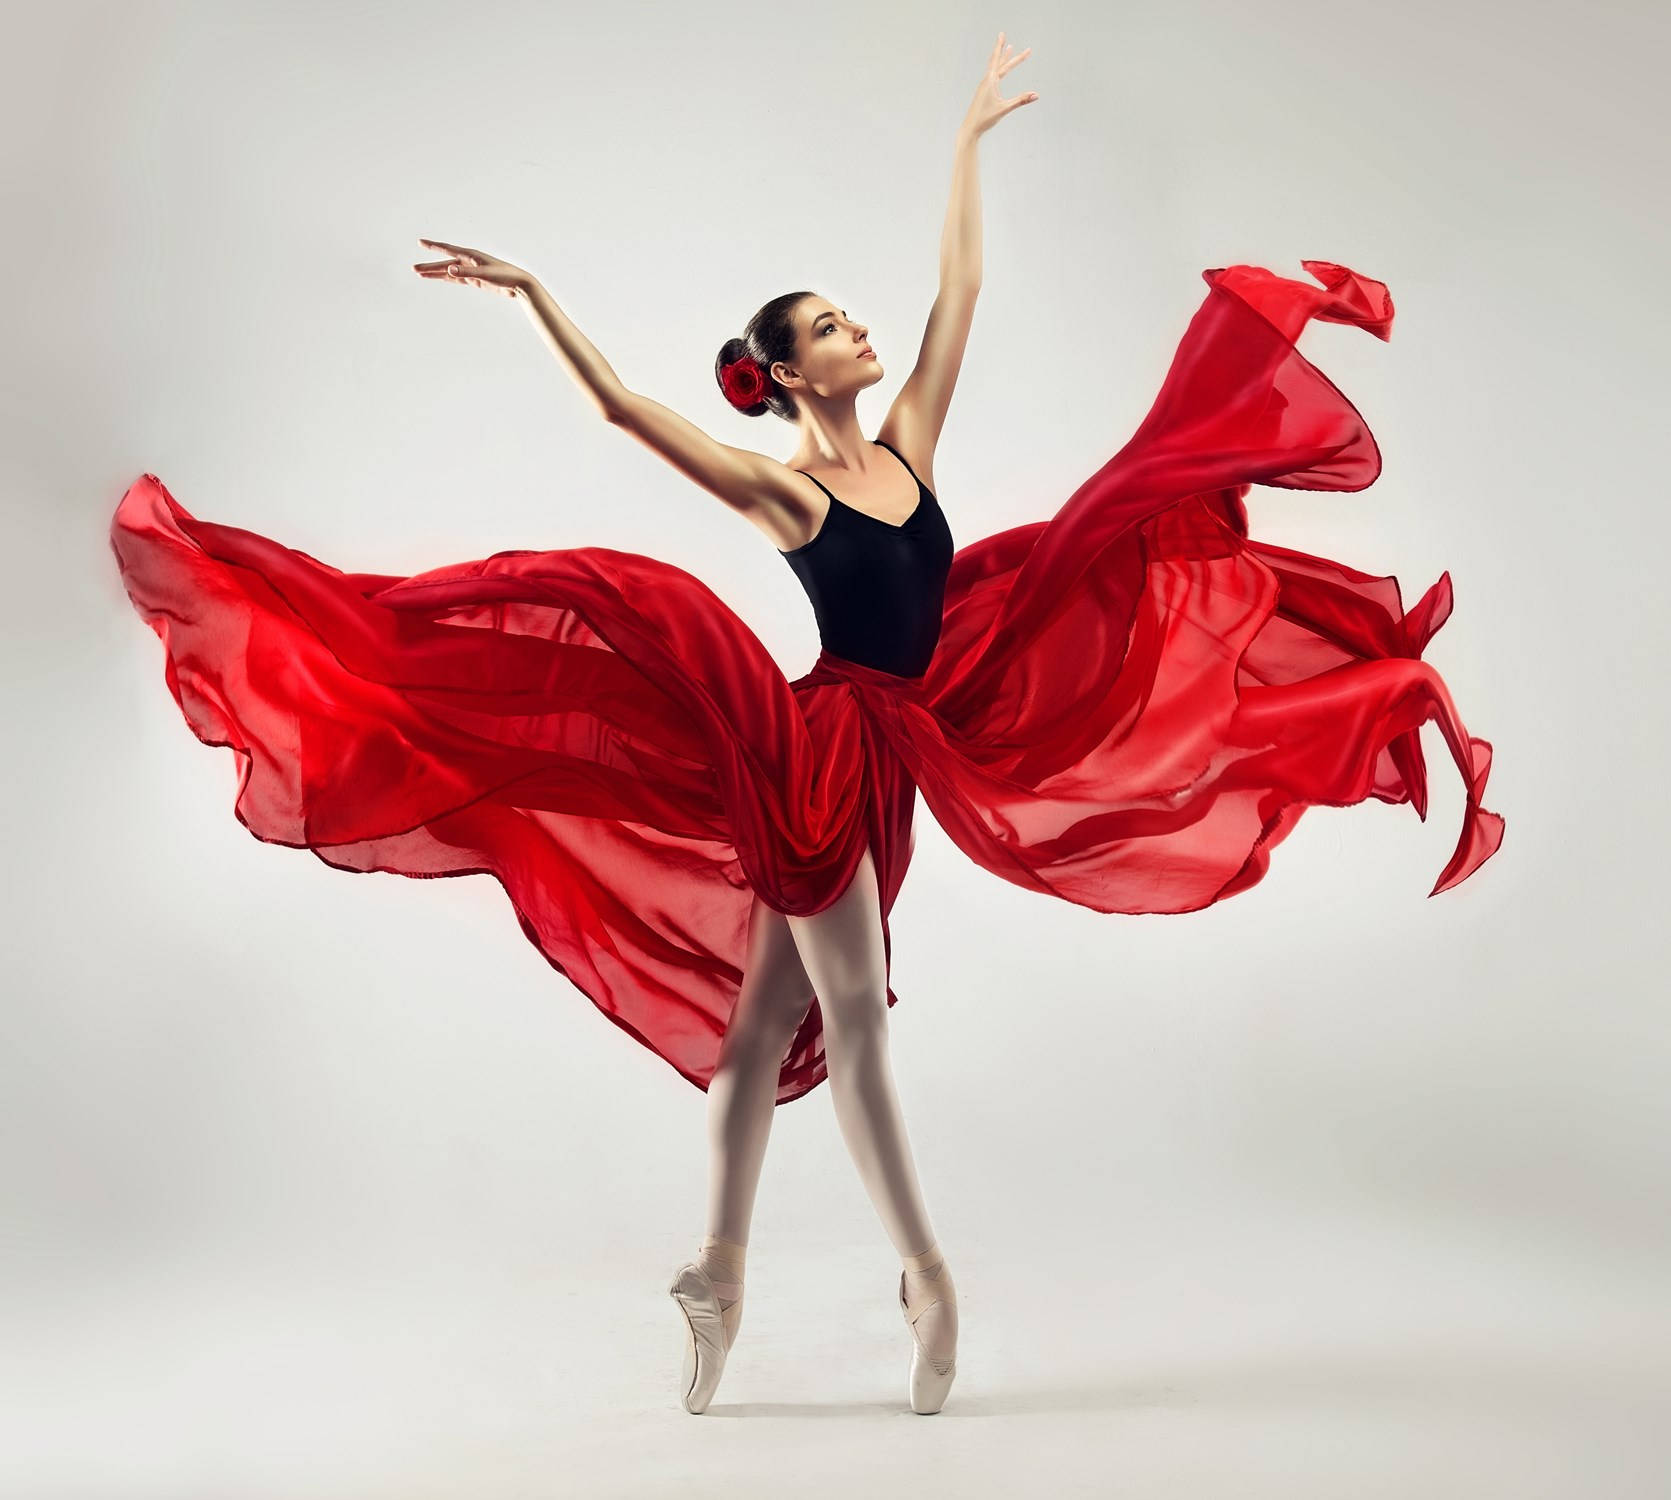 Elbailarín De Ballet Más Romántico Y Profesional. Fondo de pantalla